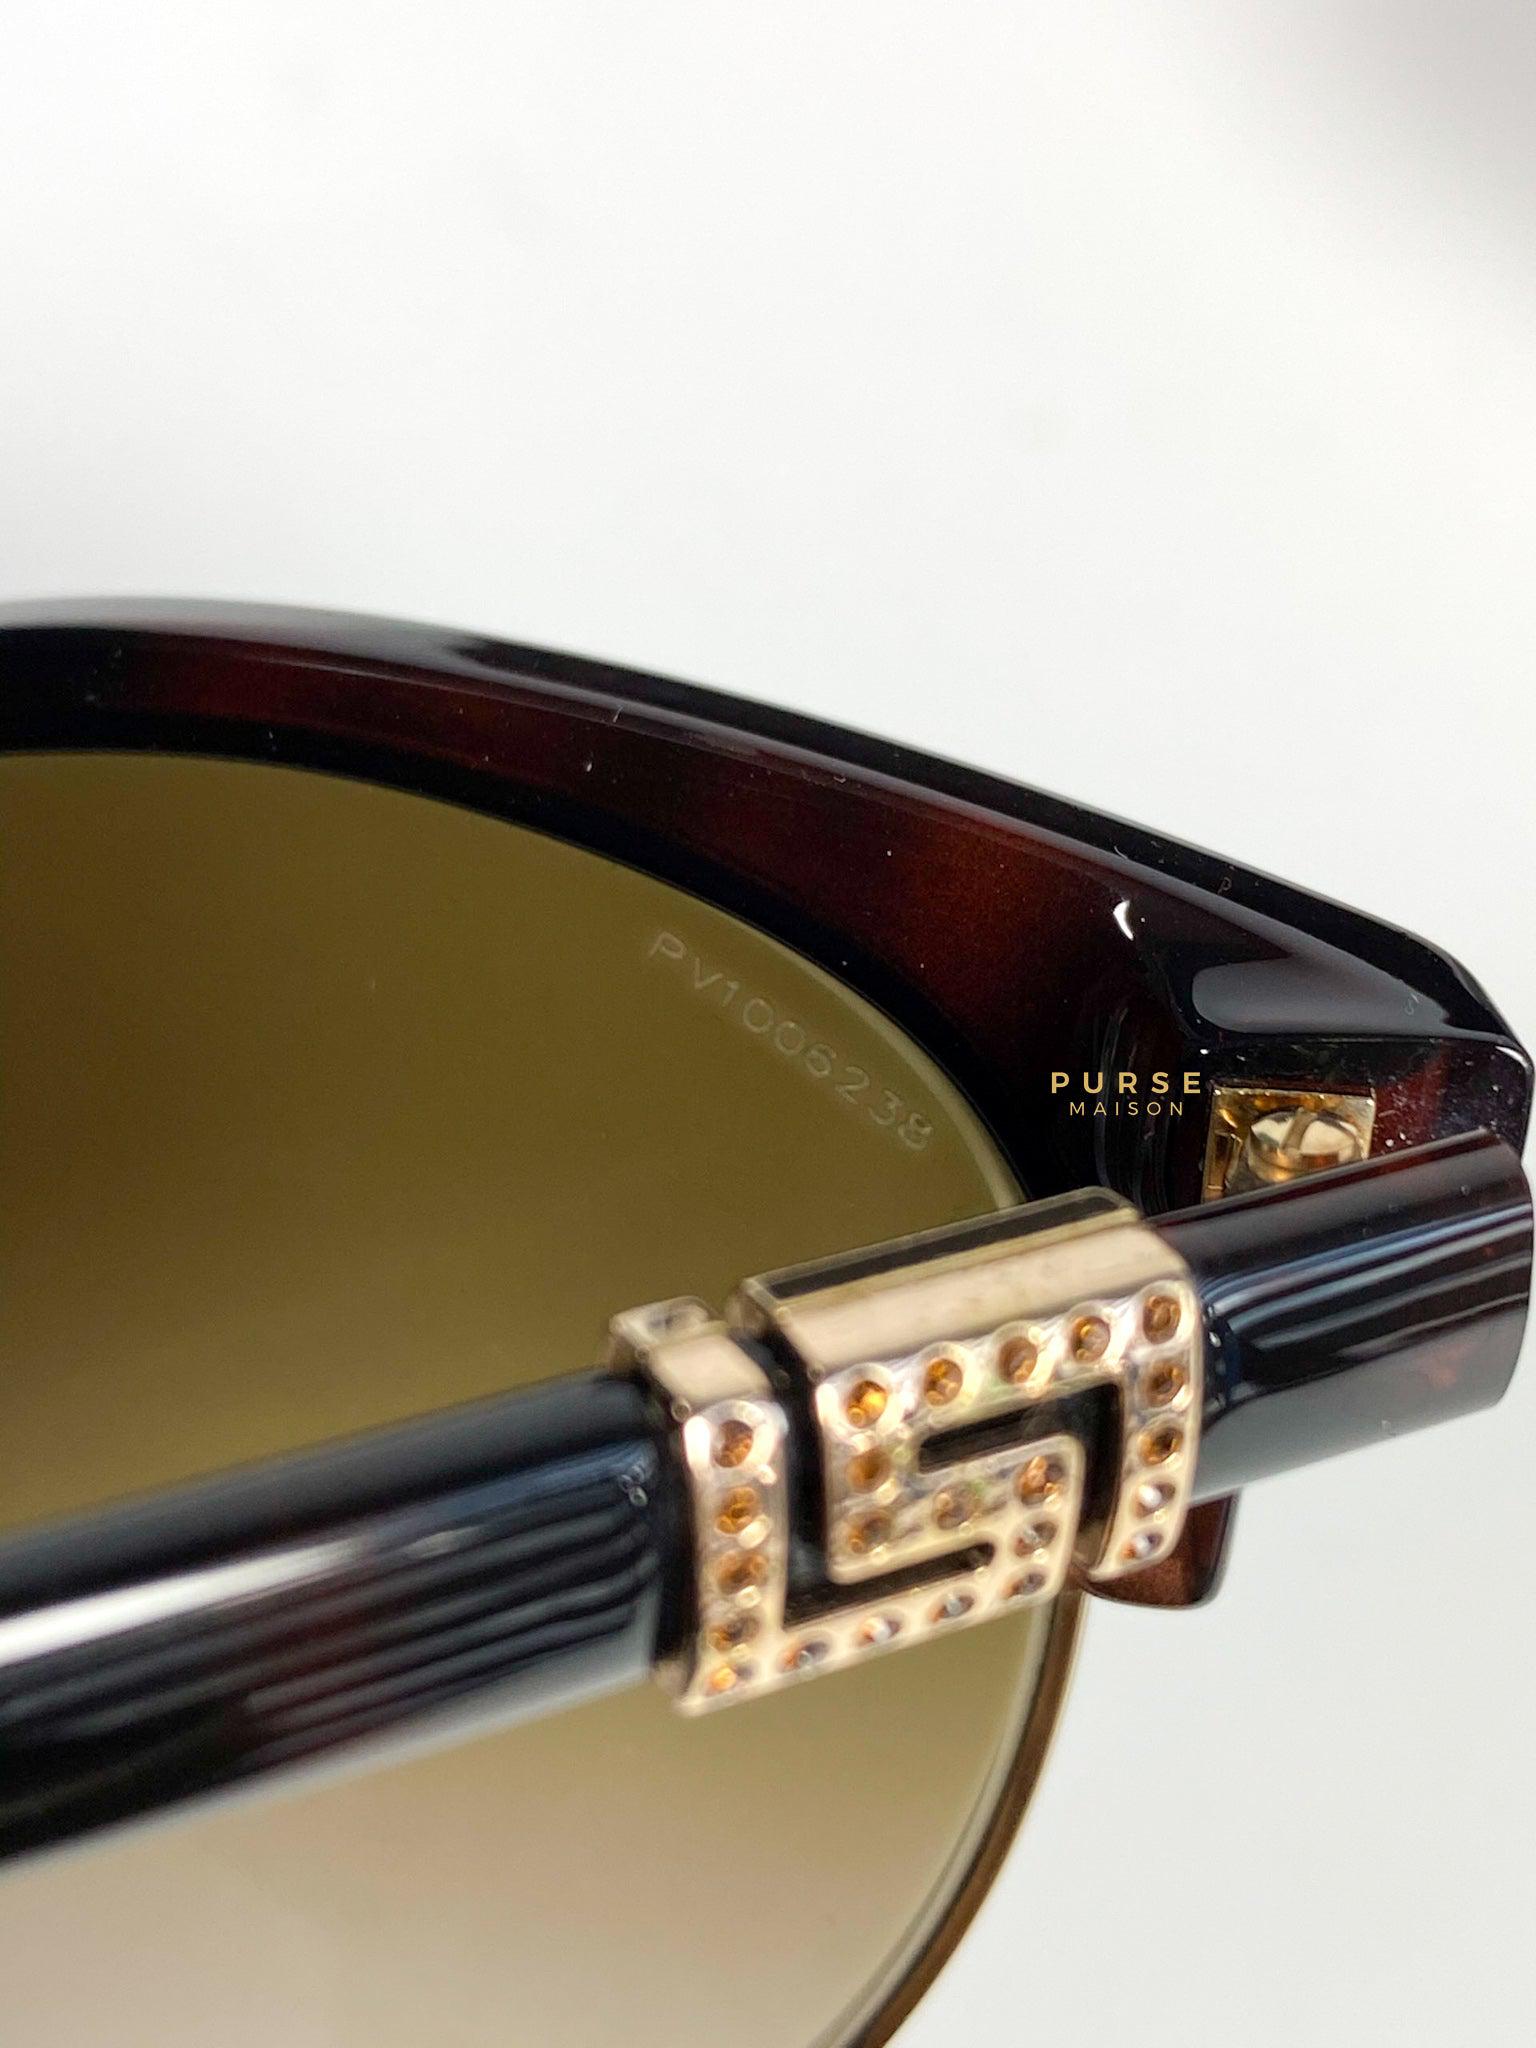 Versace 0VE4326B - 521213 Brown Sunglasses for Women